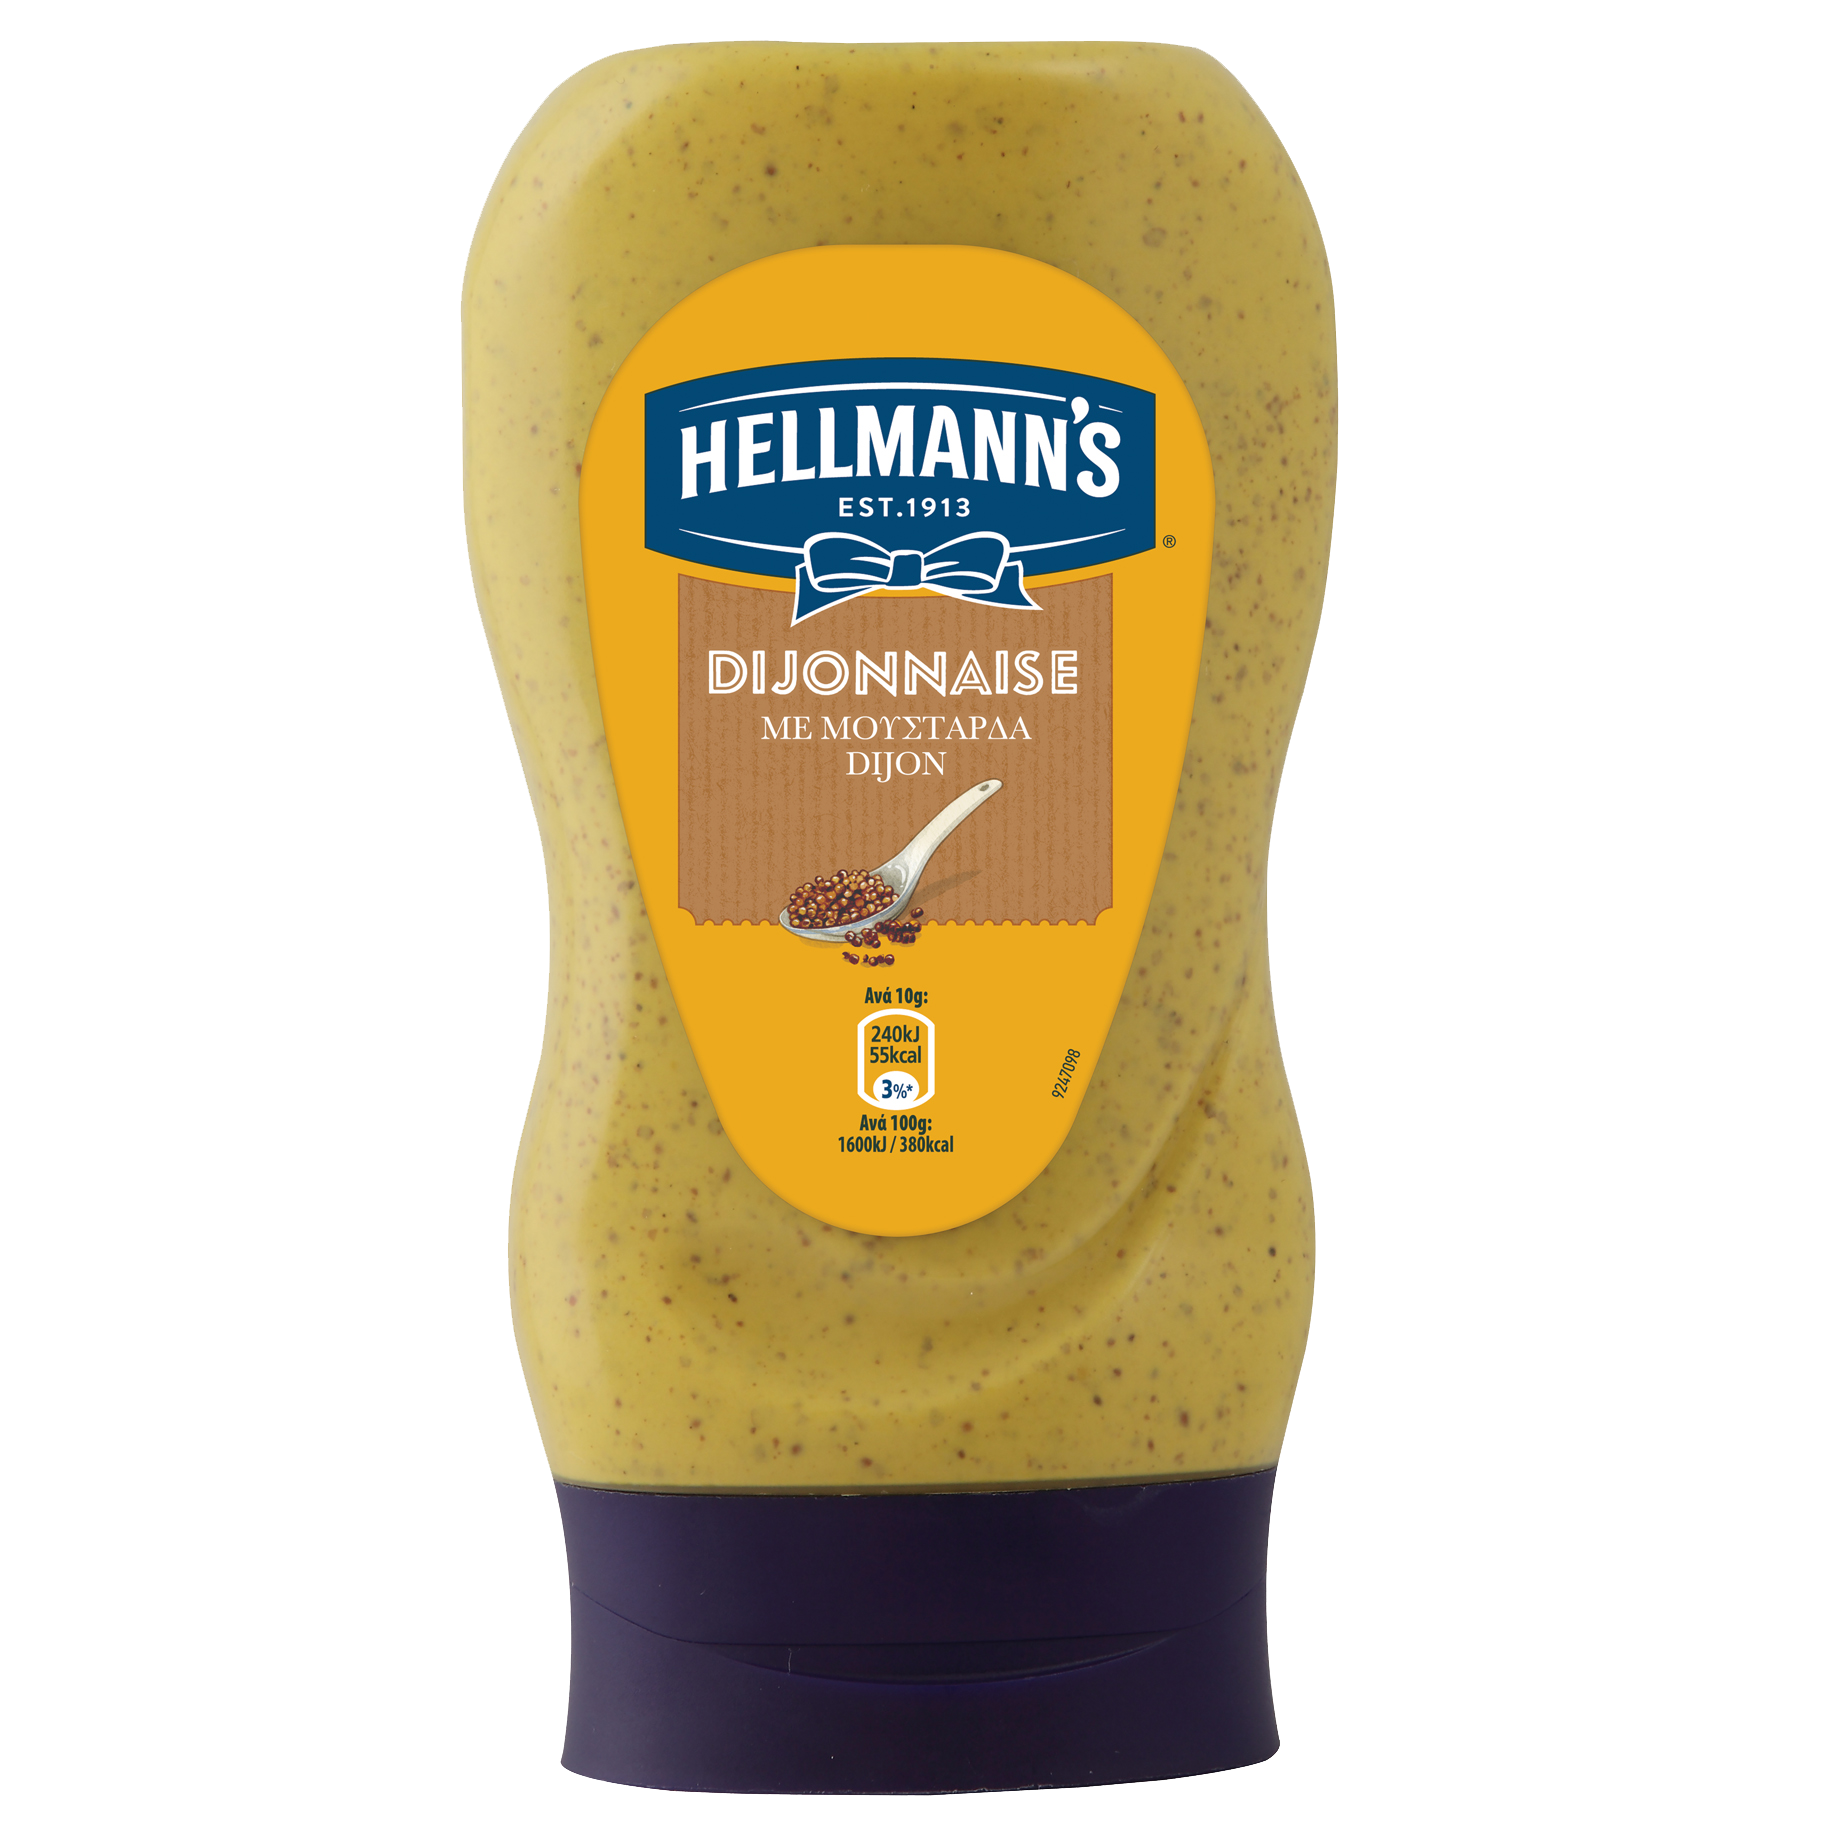 Hellmann's Dijonnaise